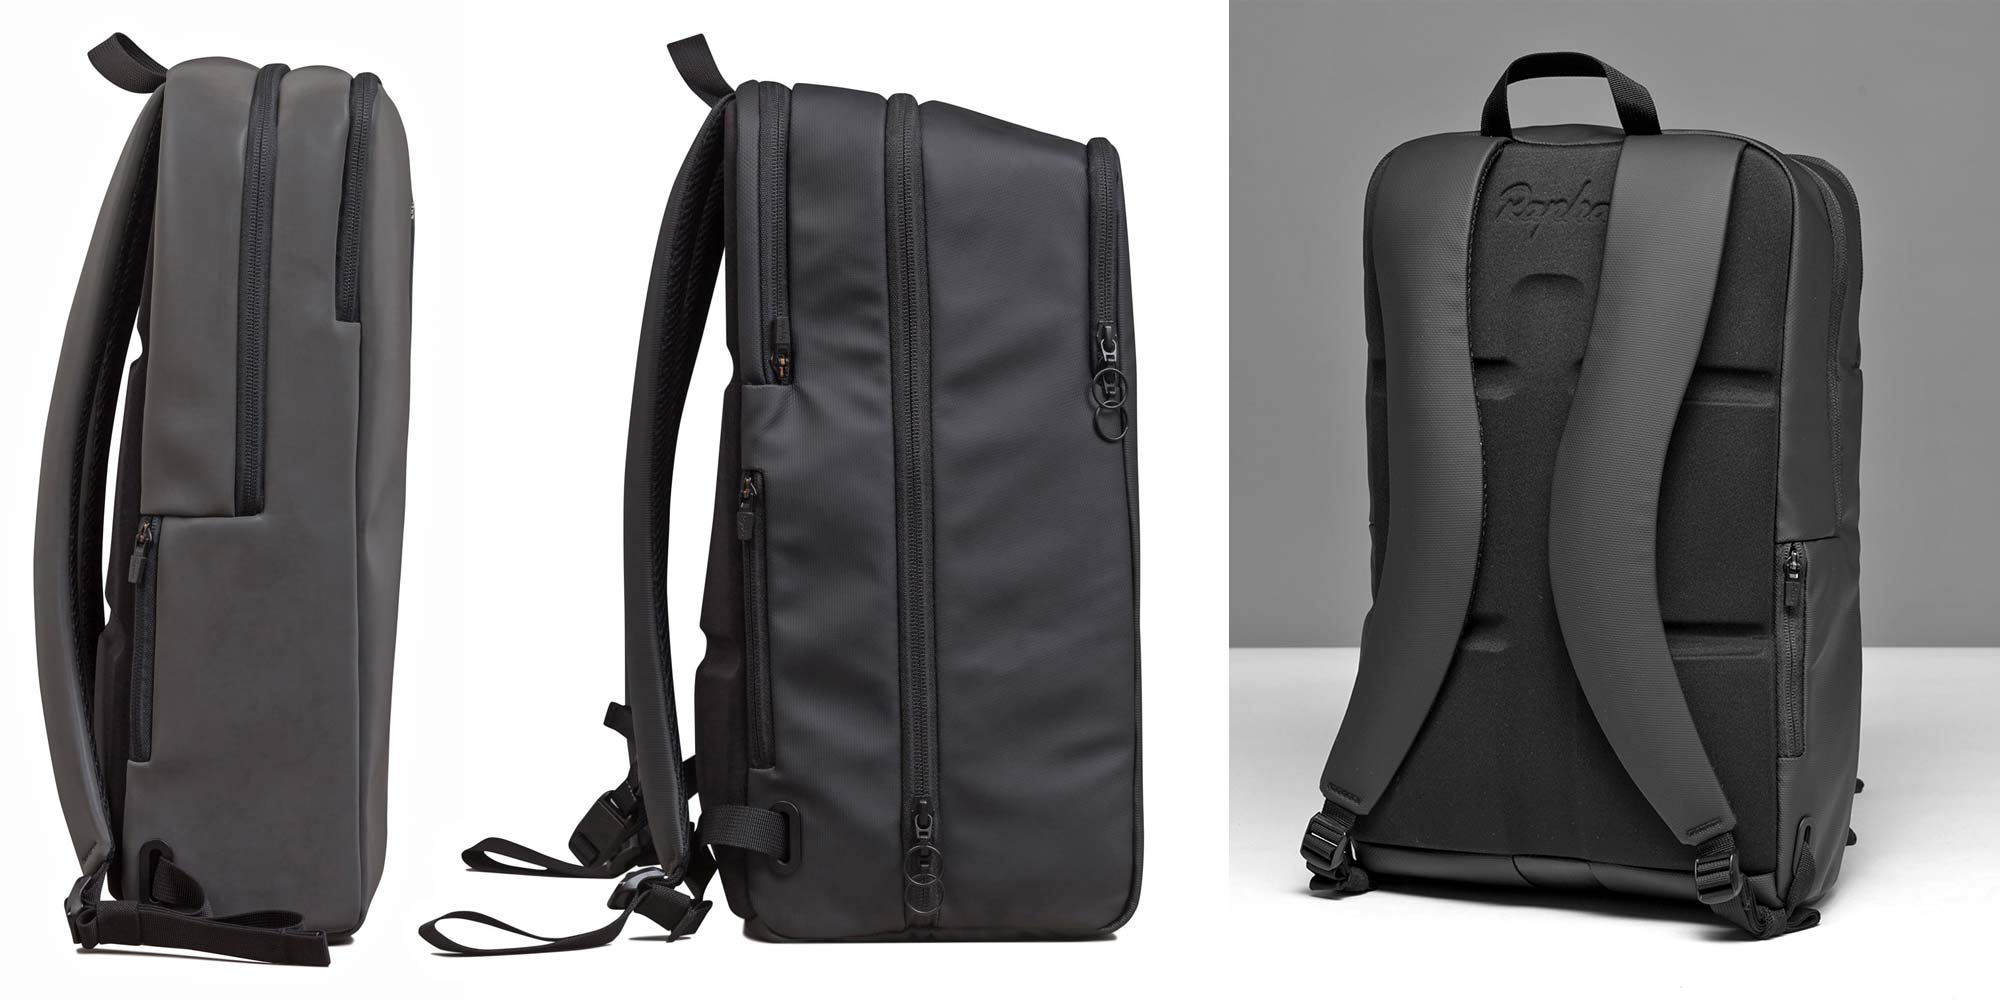 Silca, Rapha pack up several new commuting & travel bag options